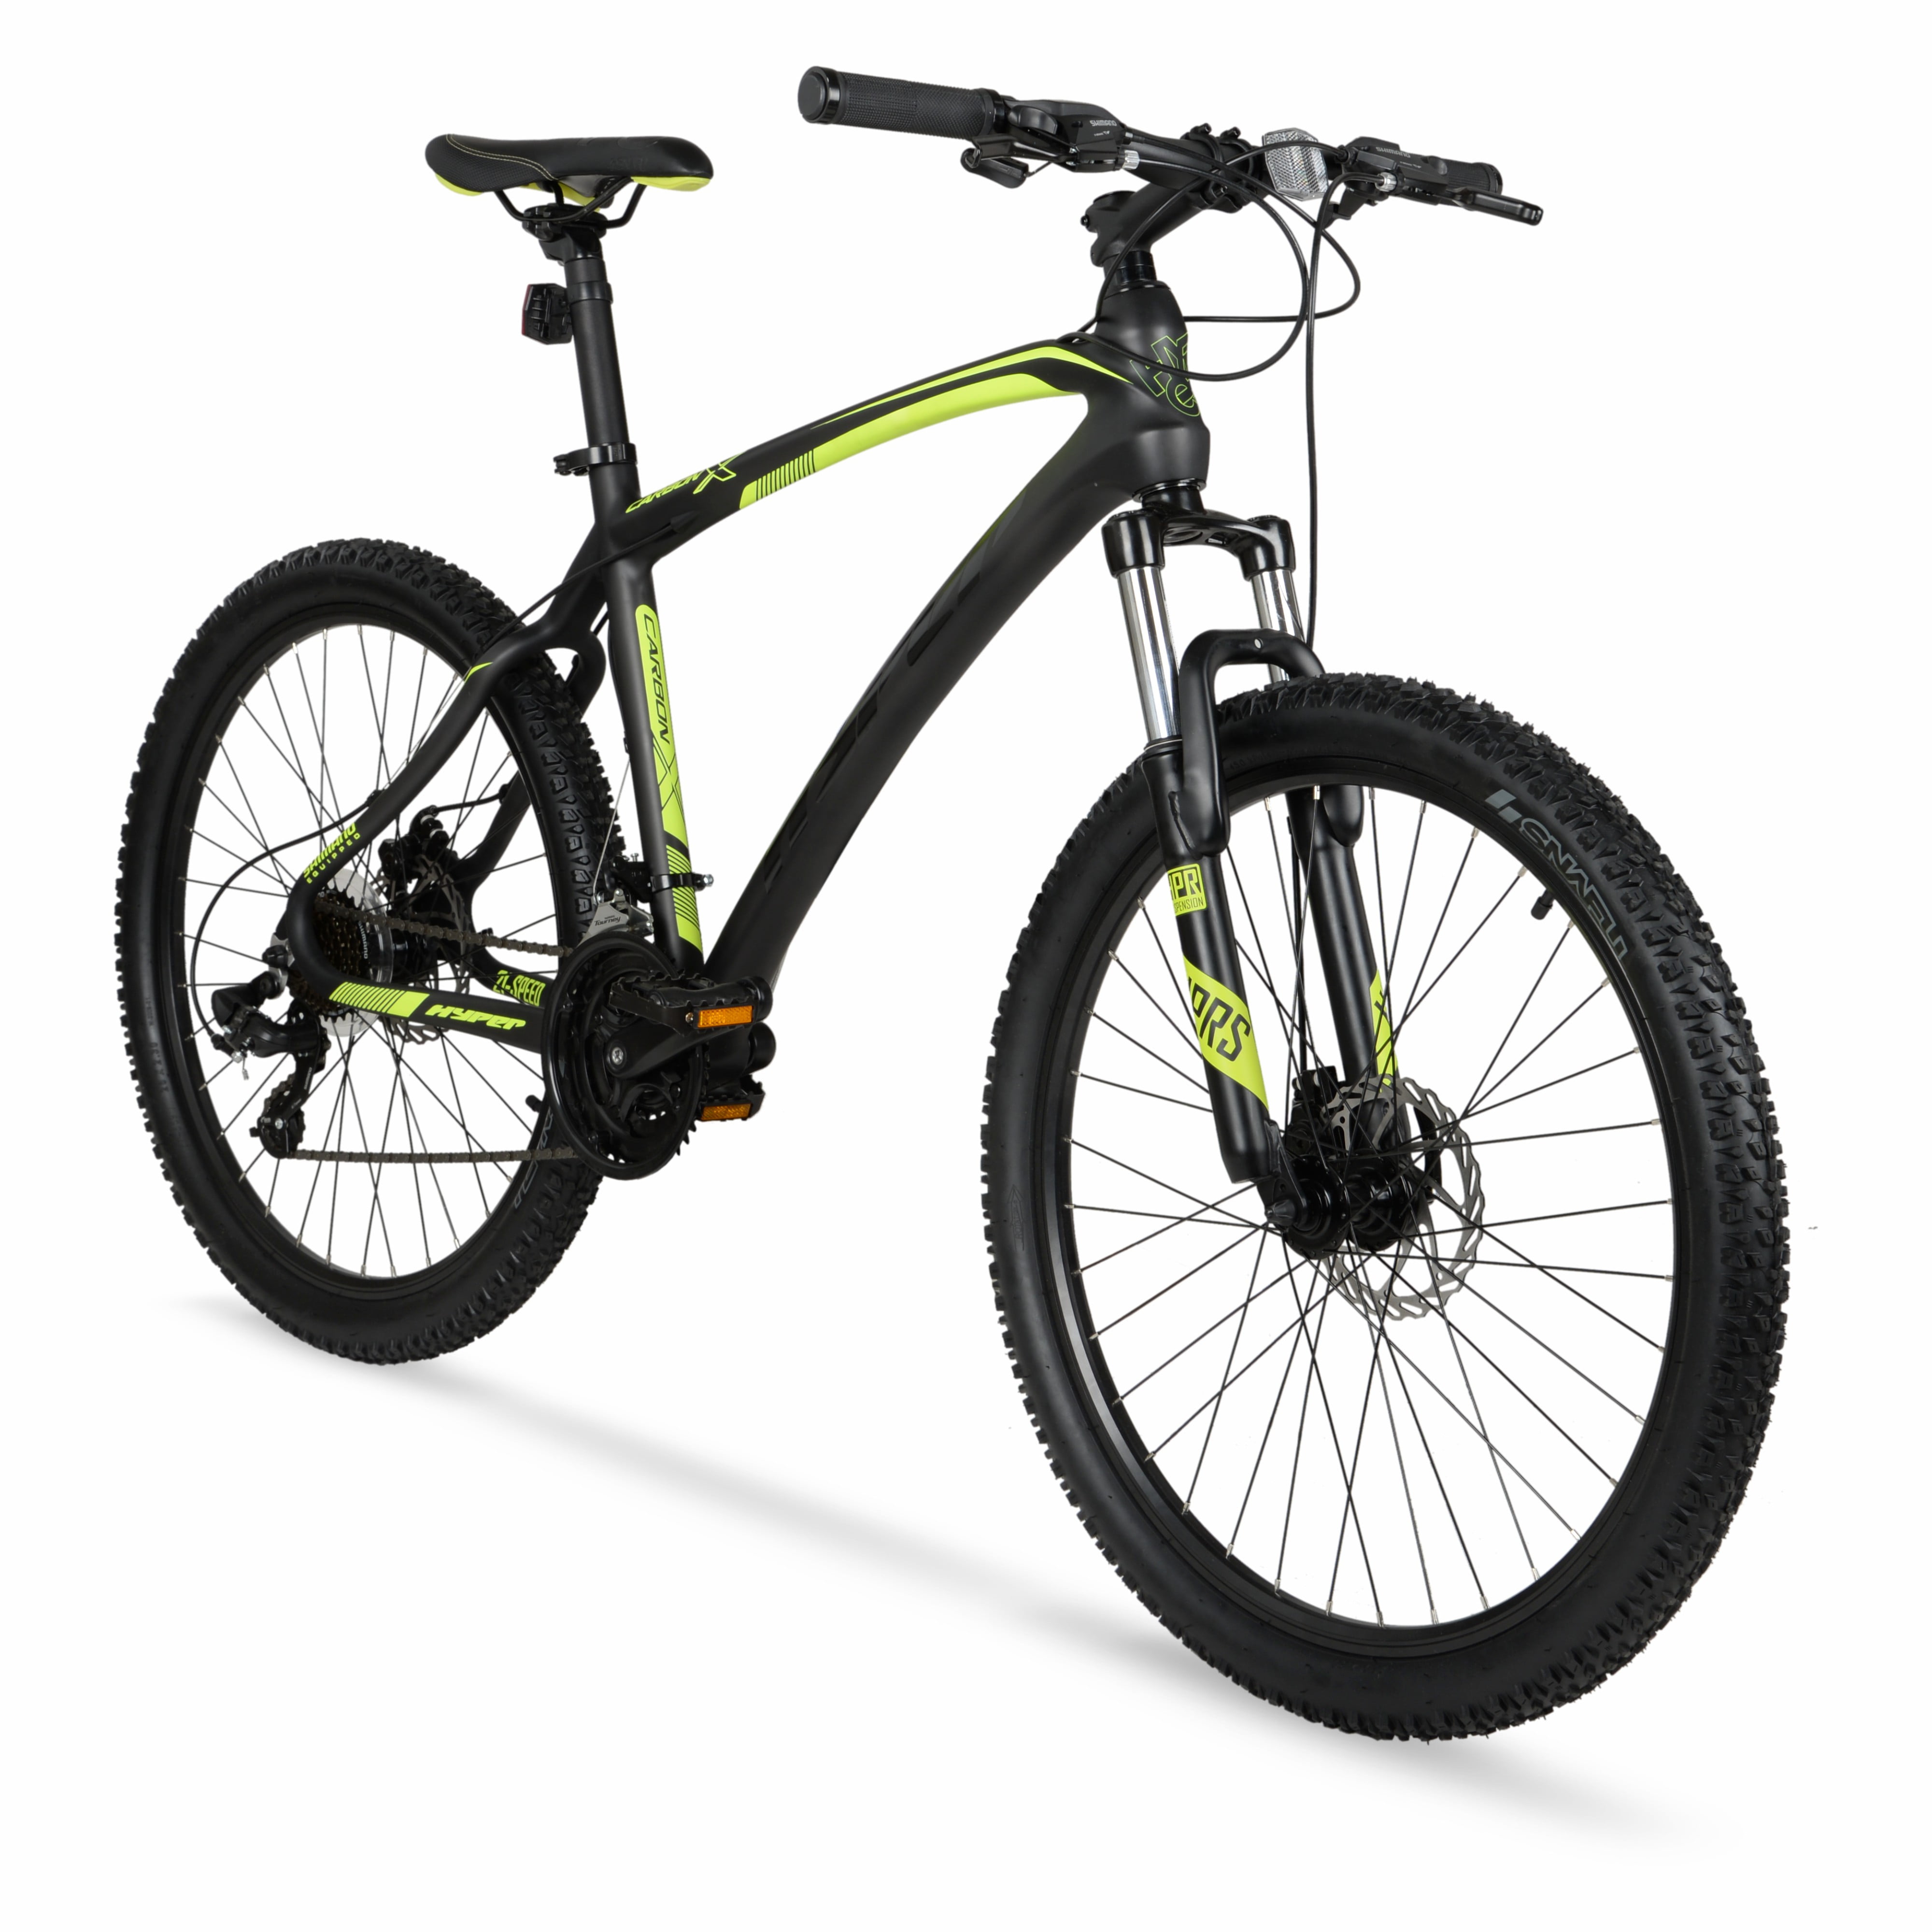 Hyper 26" Carbon Fiber Men's Mountain Bike, Black/Green Walmart